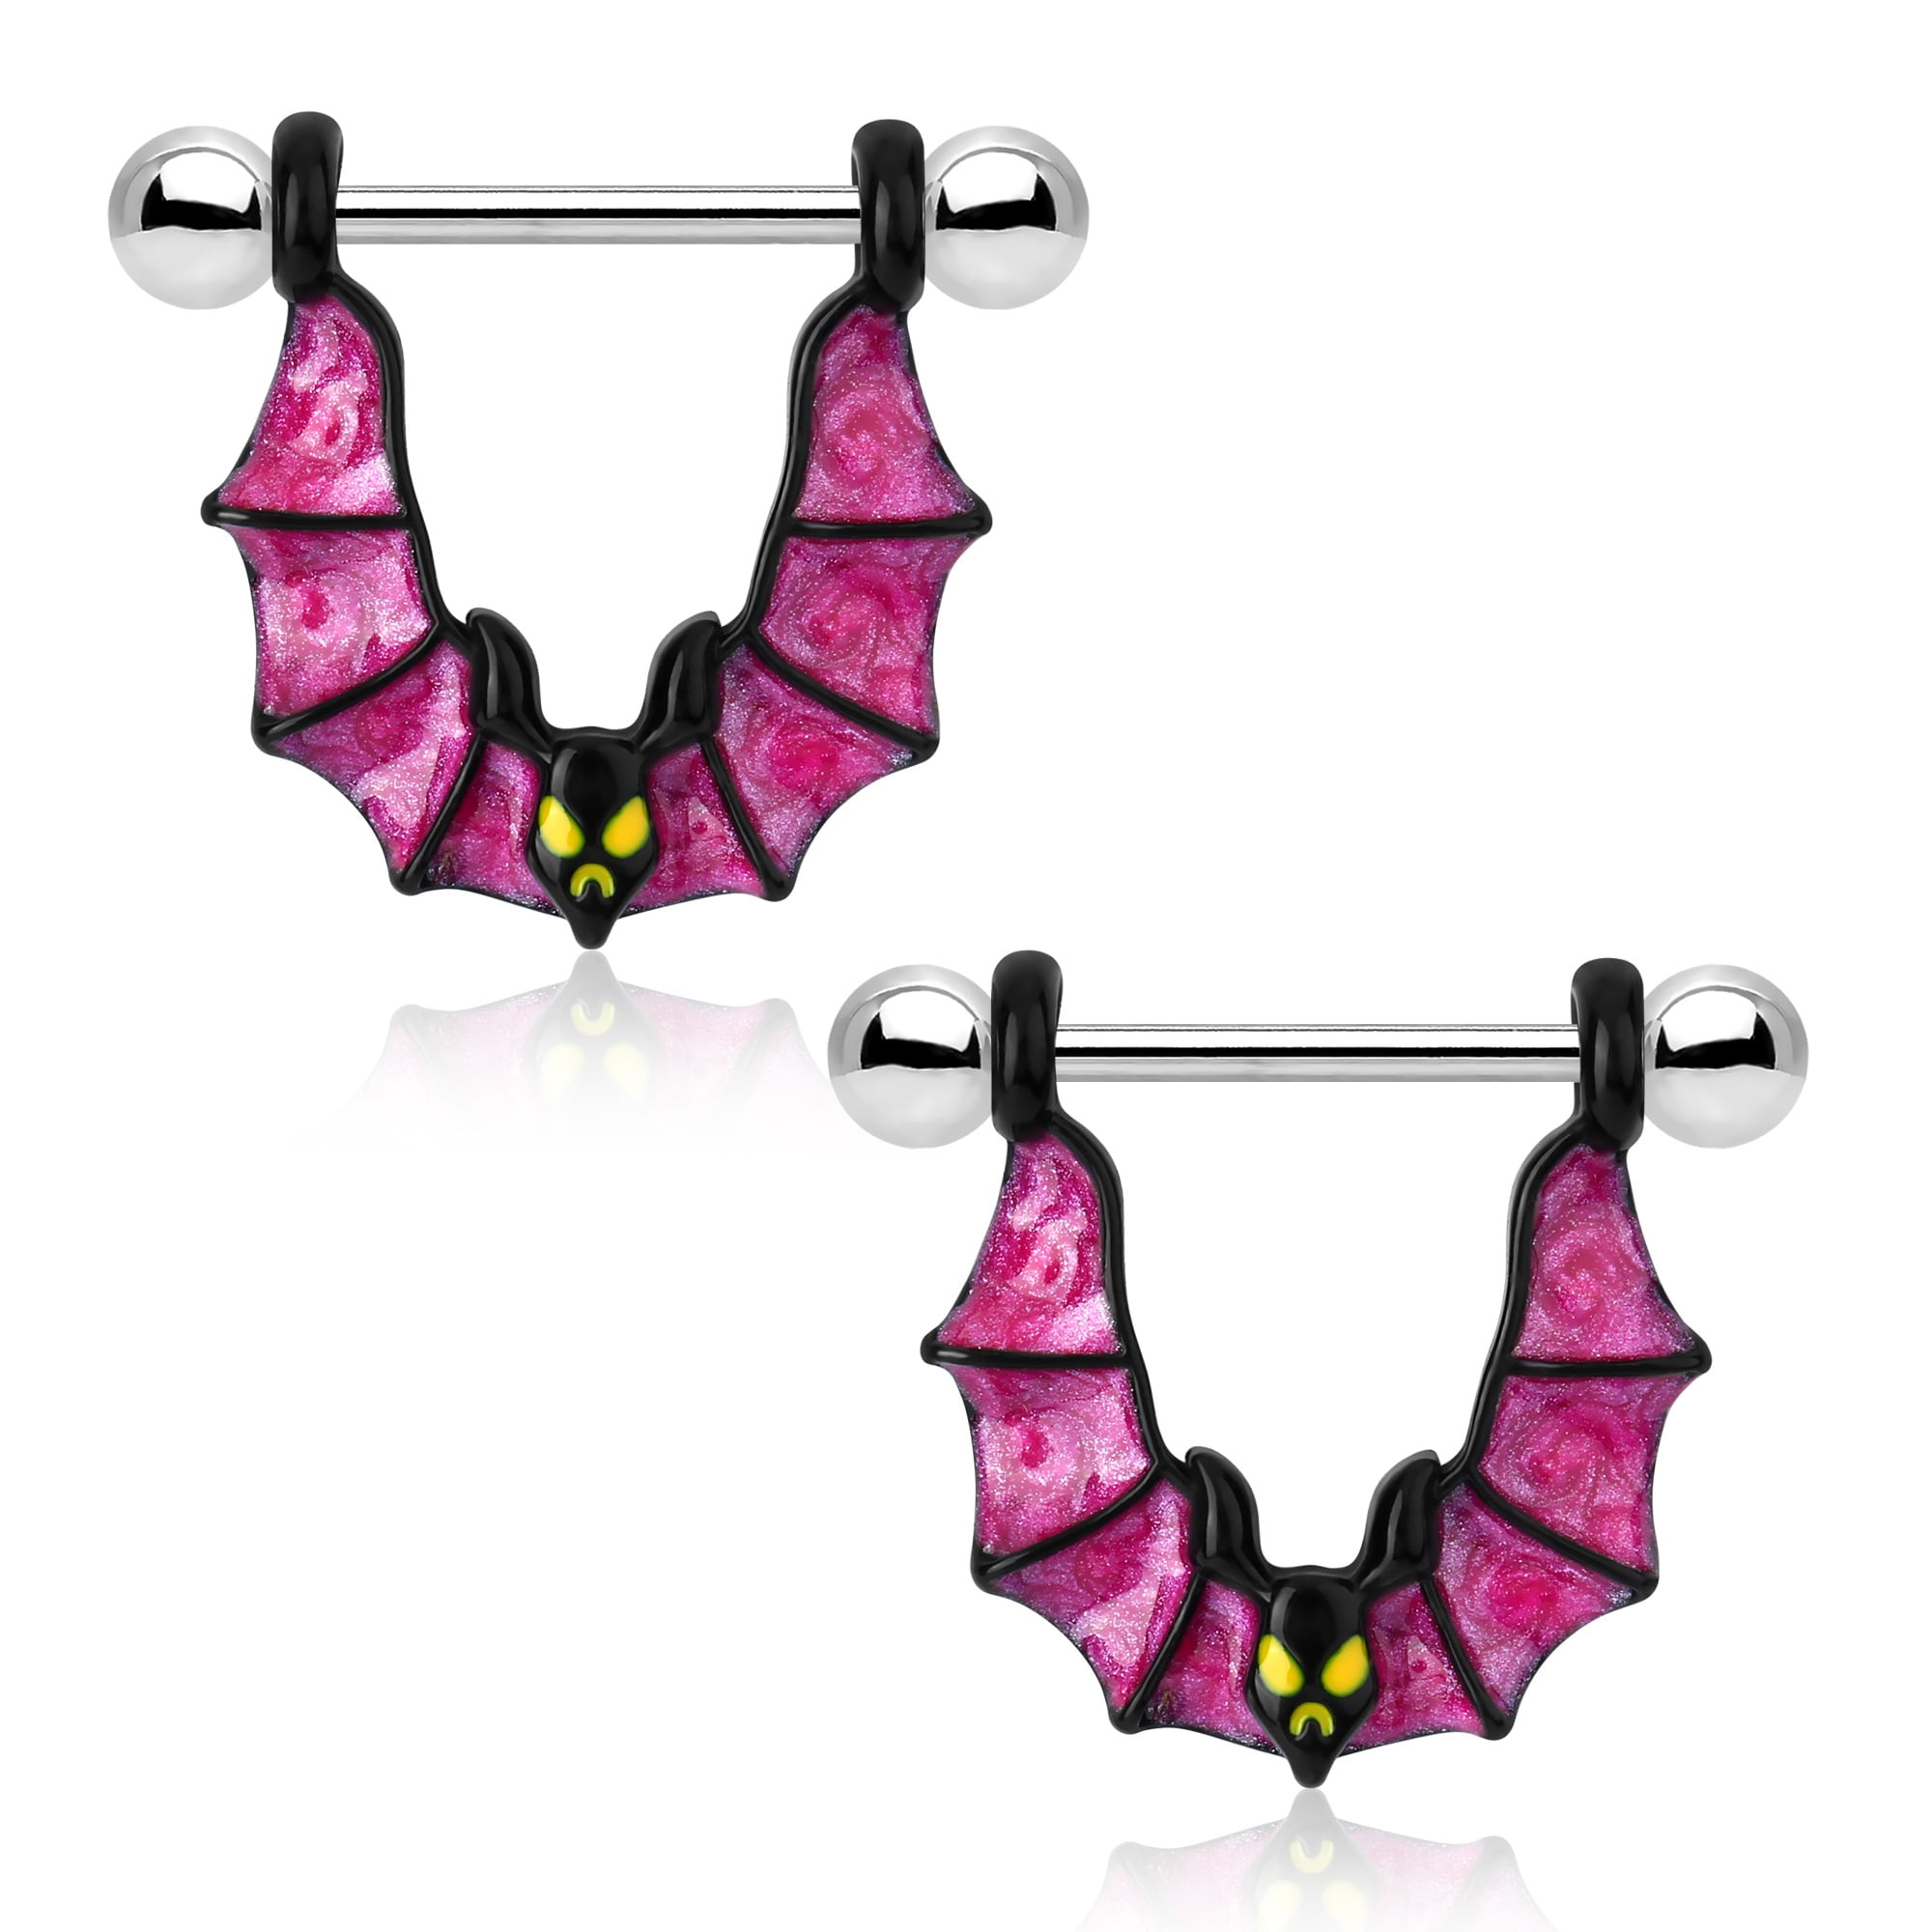 14G Bat Wing Nipple Ring/nipple Piercing/nipple Jewelry/nipple